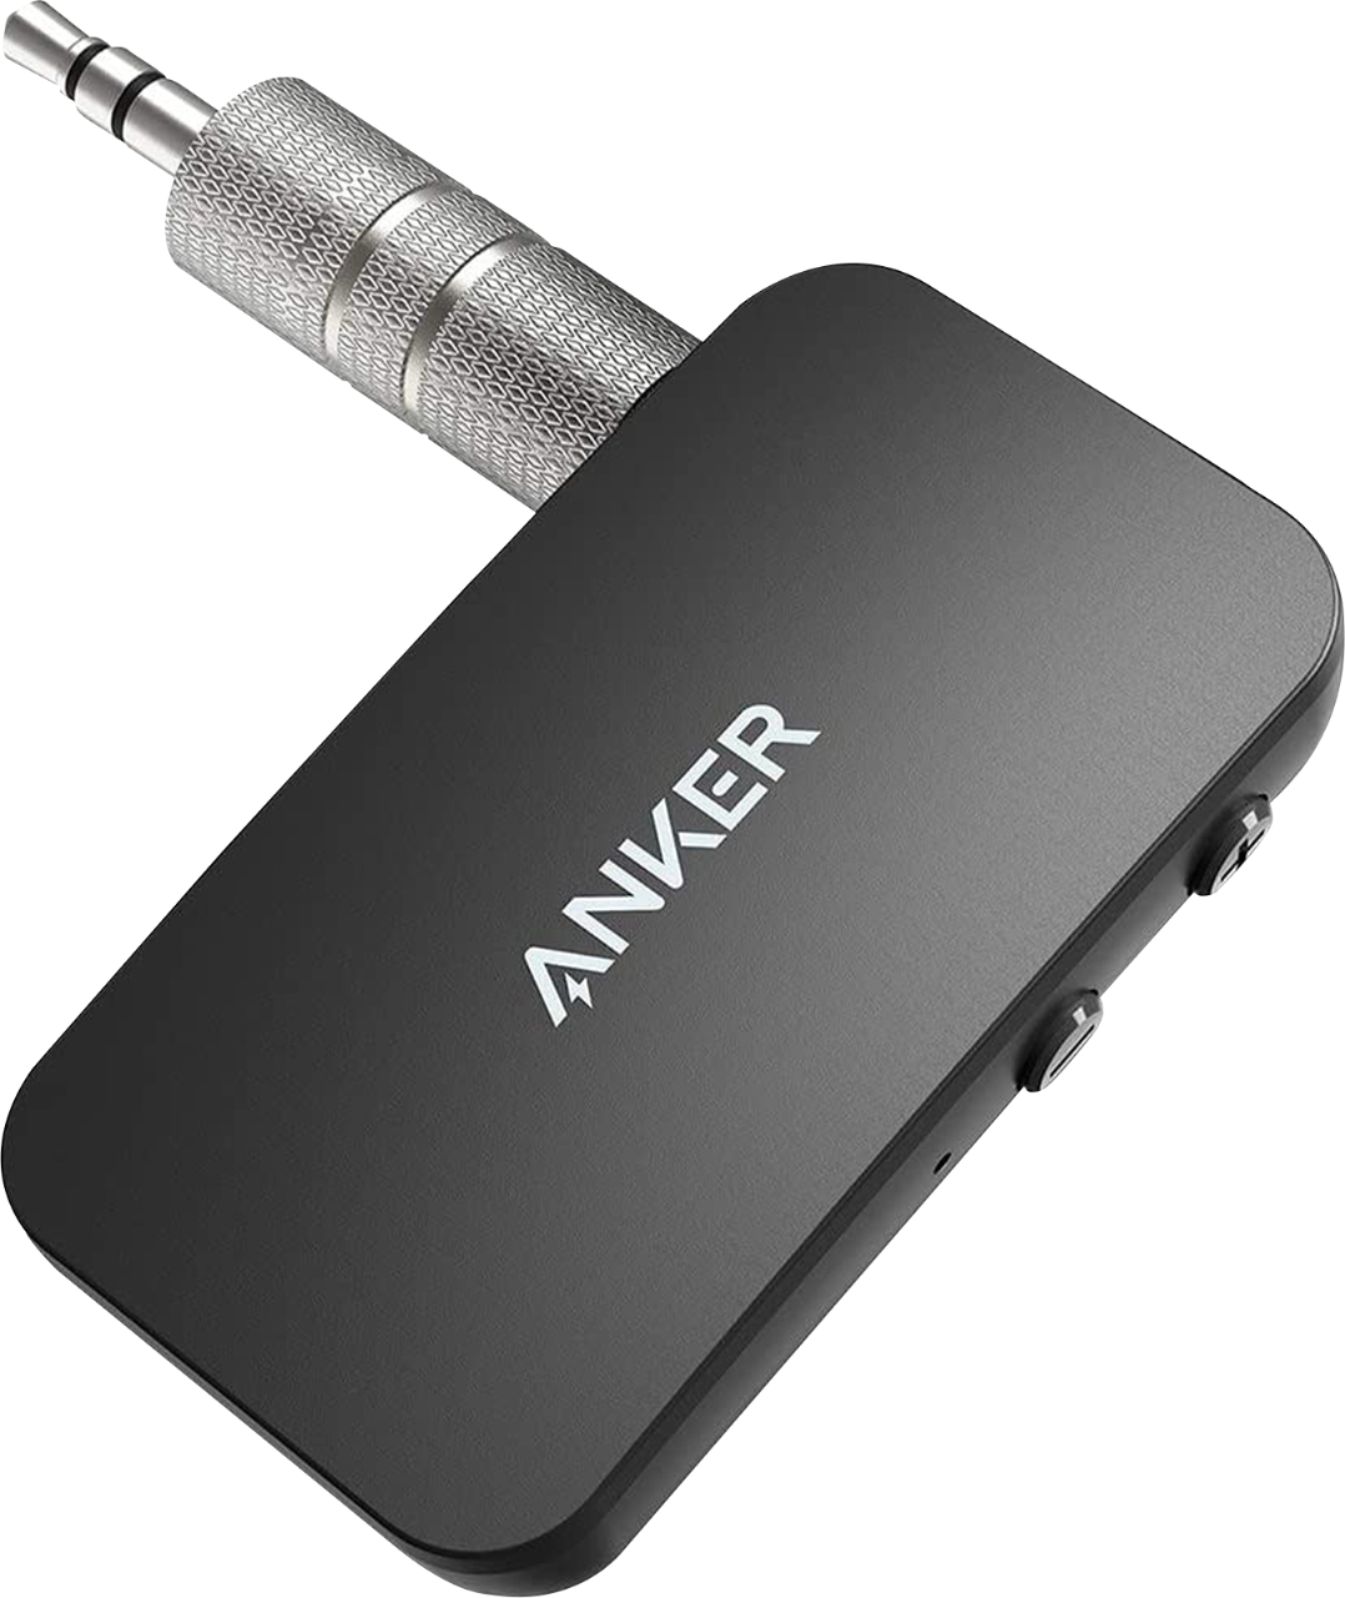 Anker Soundsync Portable Bluetooth Transmitter Battery A8327H11-1 - Buy